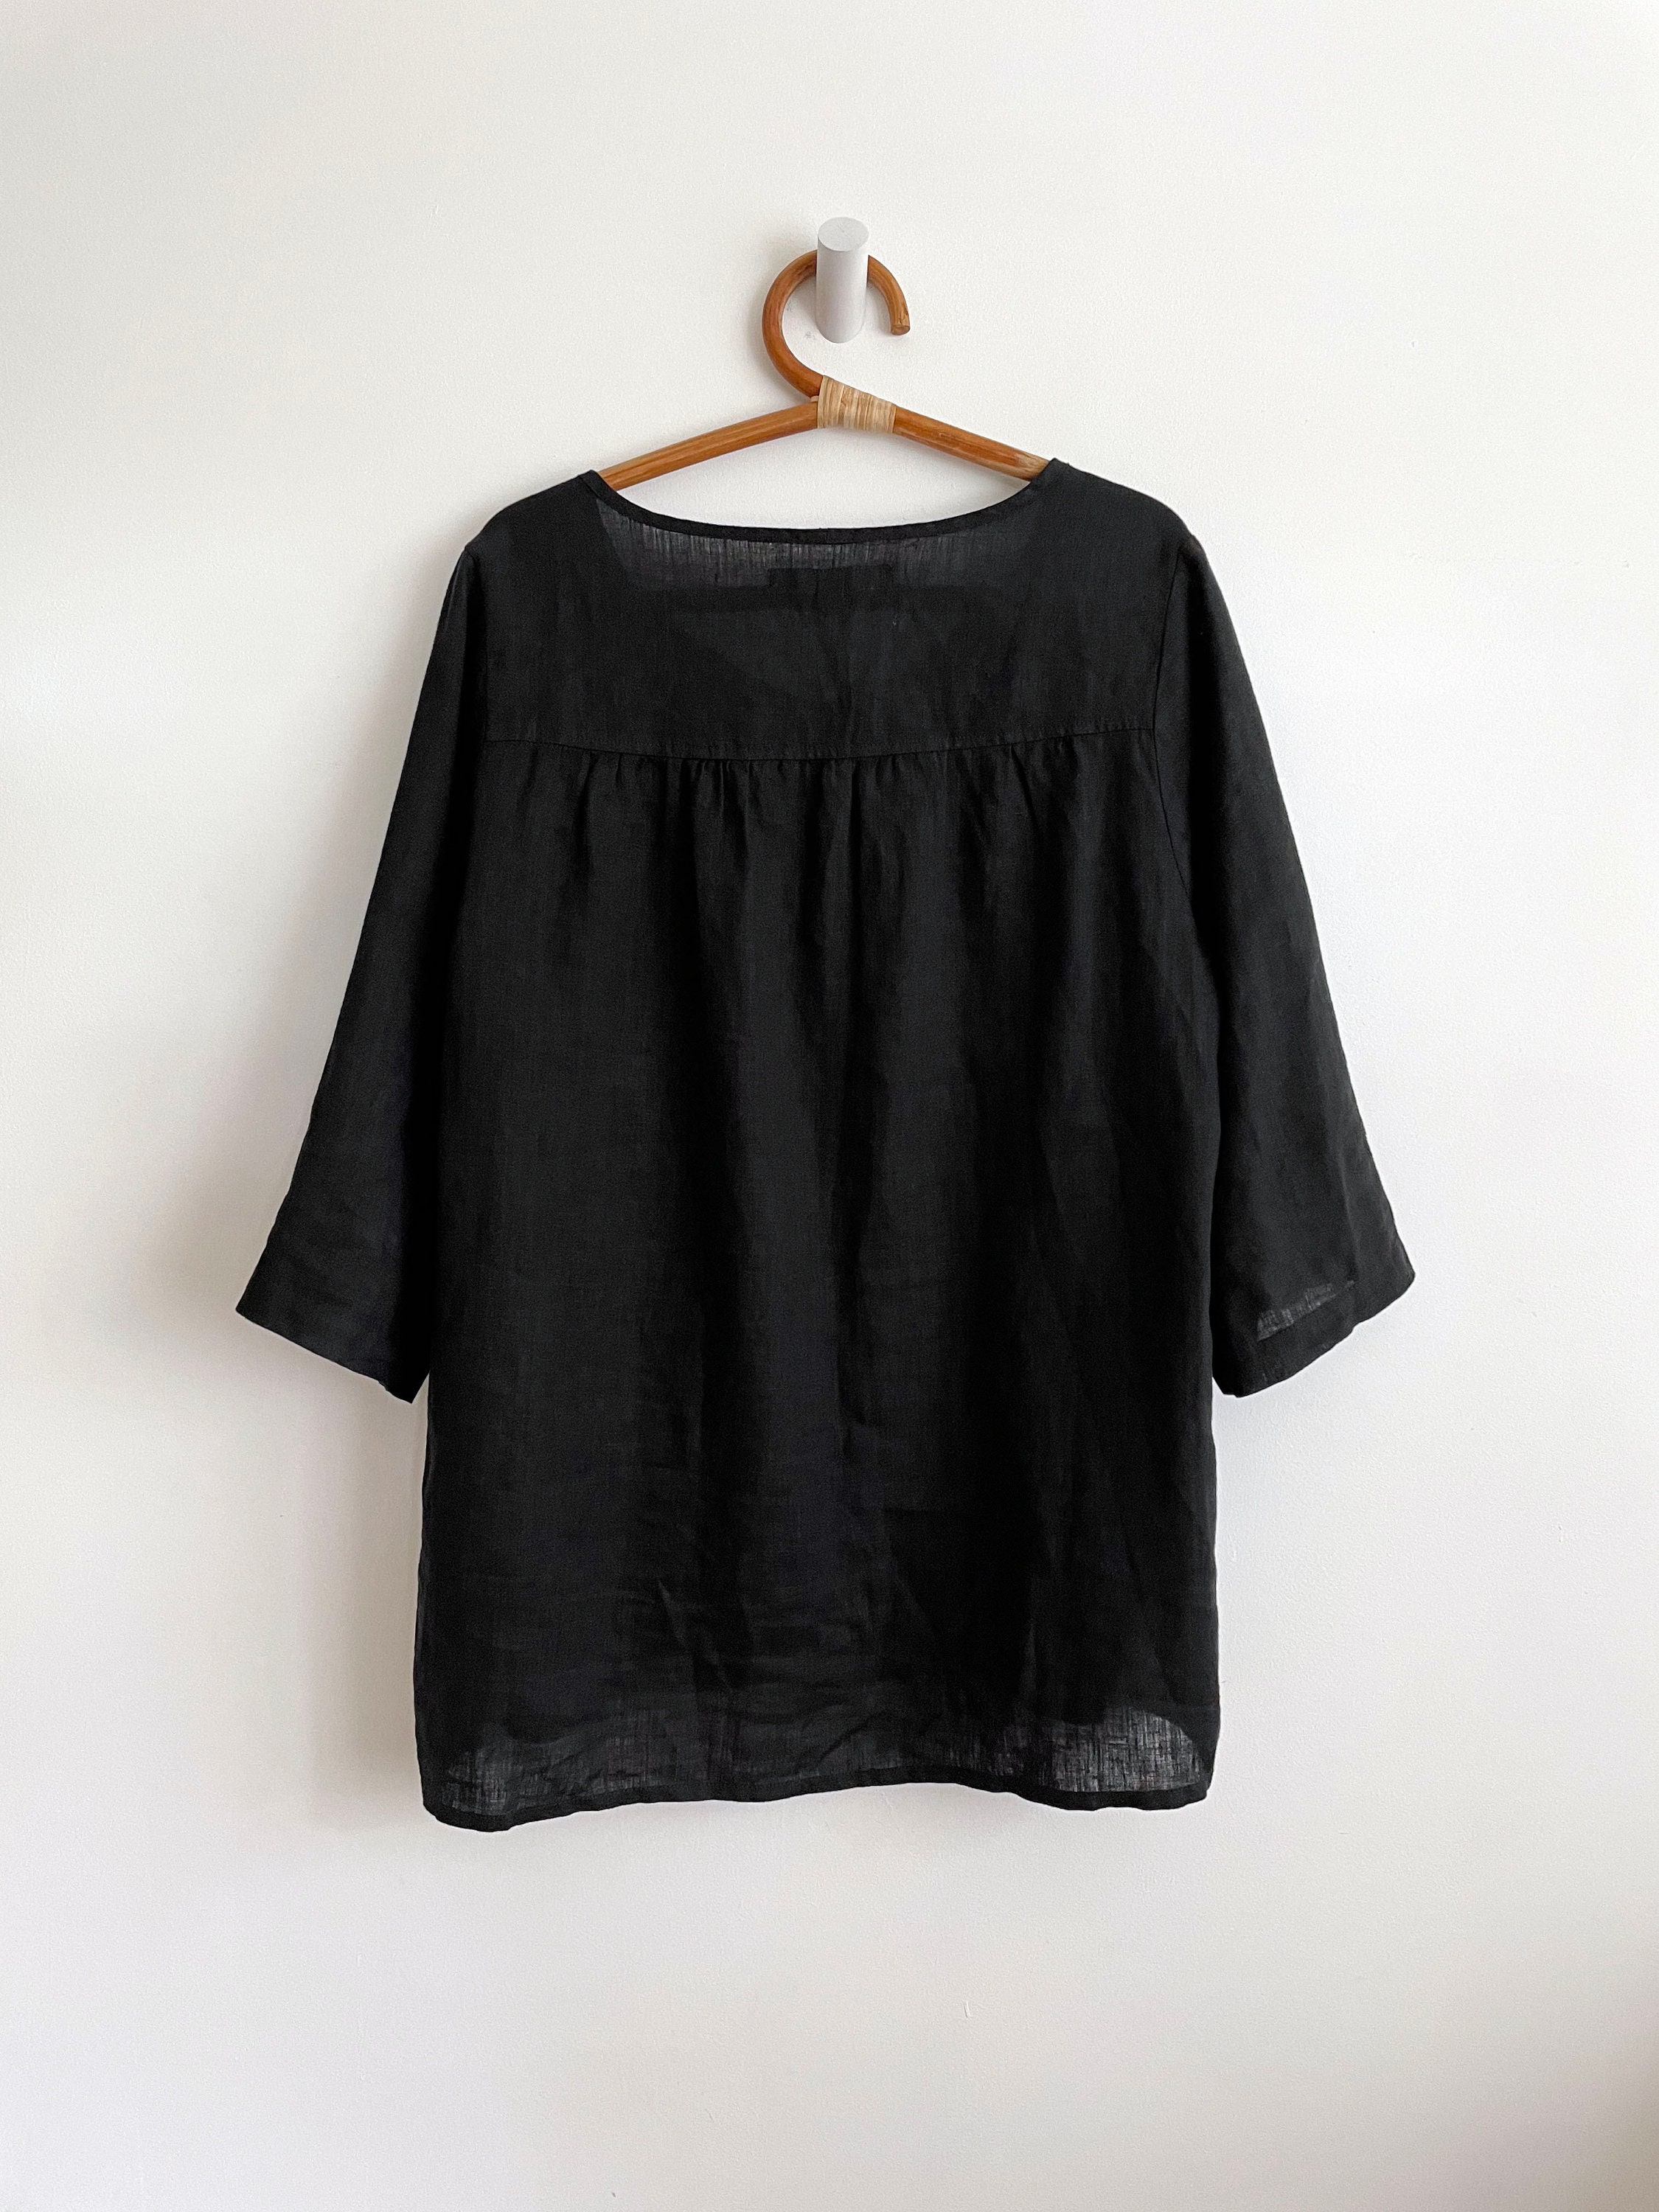 Modern vintage black Flax linen oversized blouse top size | Etsy